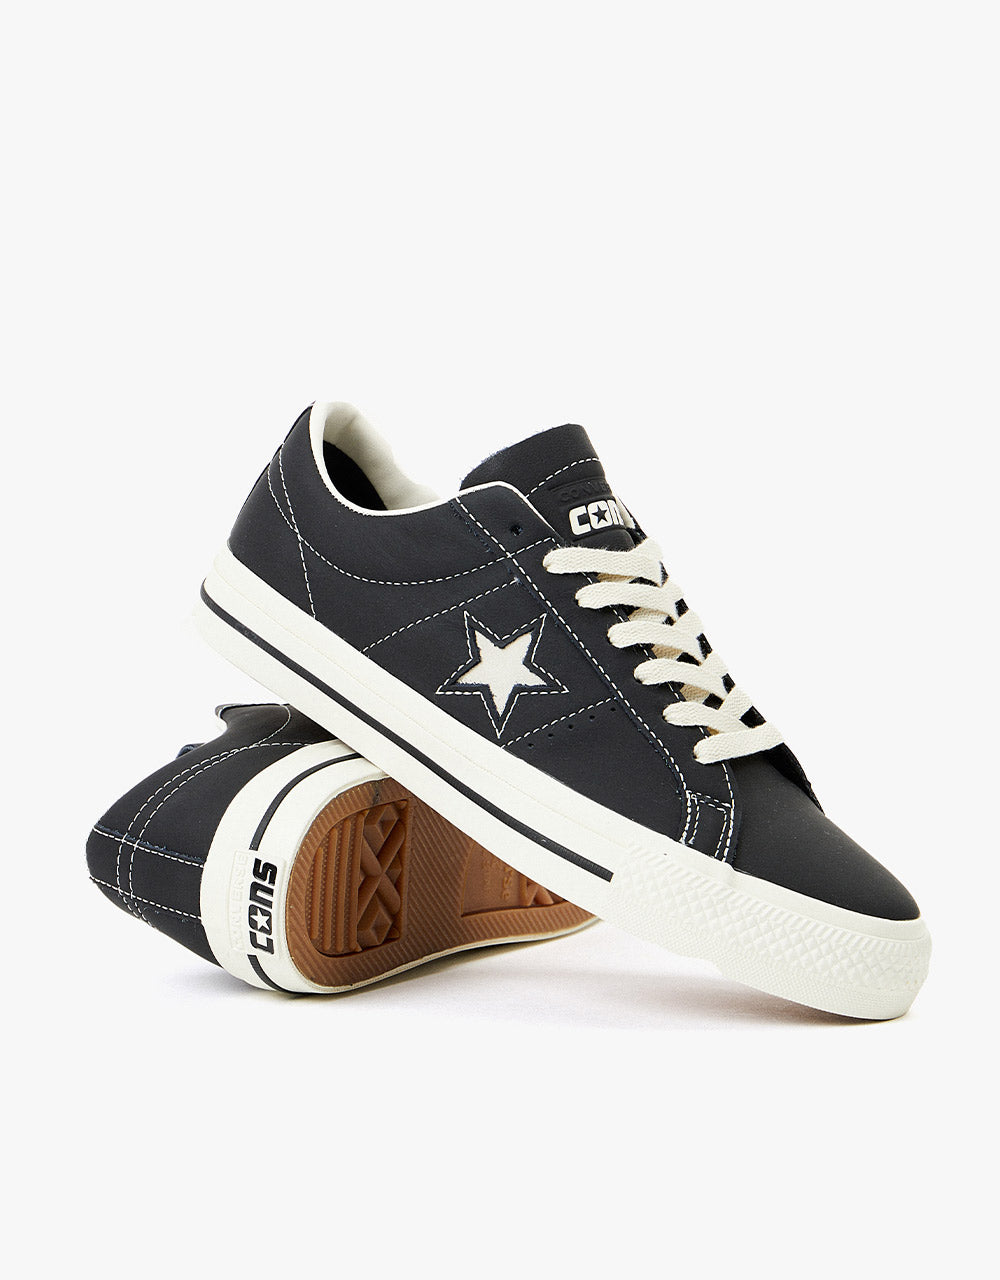 Converse One Star Pro Ox Leather Skate Shoes - Black/Black/Egret